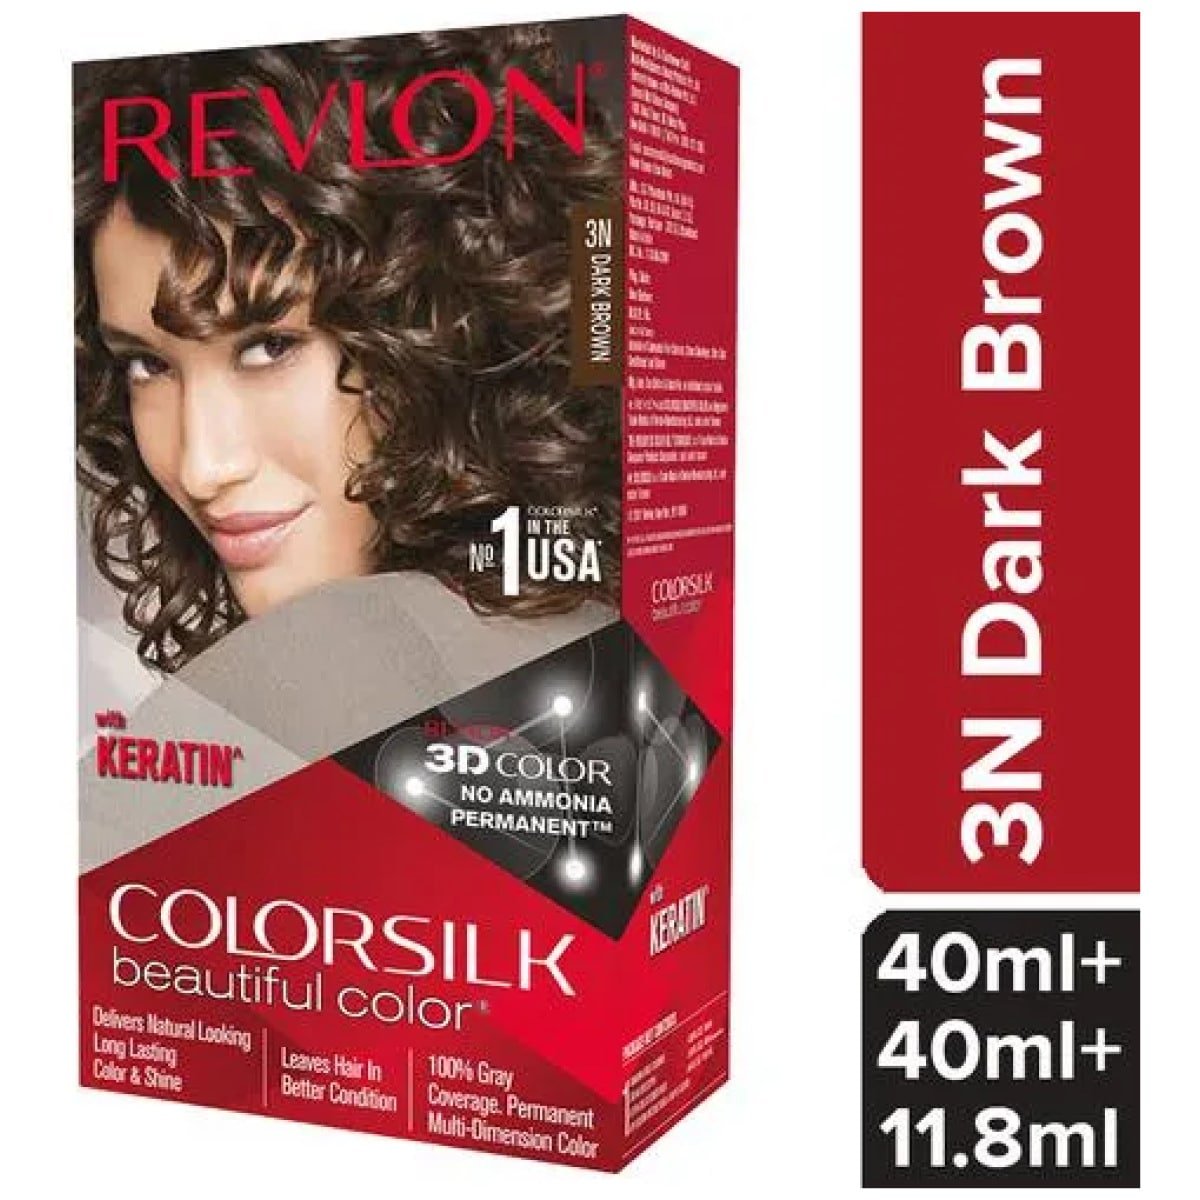 Revlon Colorsilk Beautiful 3D Color Ammonia Free Permanent 30 Dark Brown (40Ml+40Ml+11.8Ml)